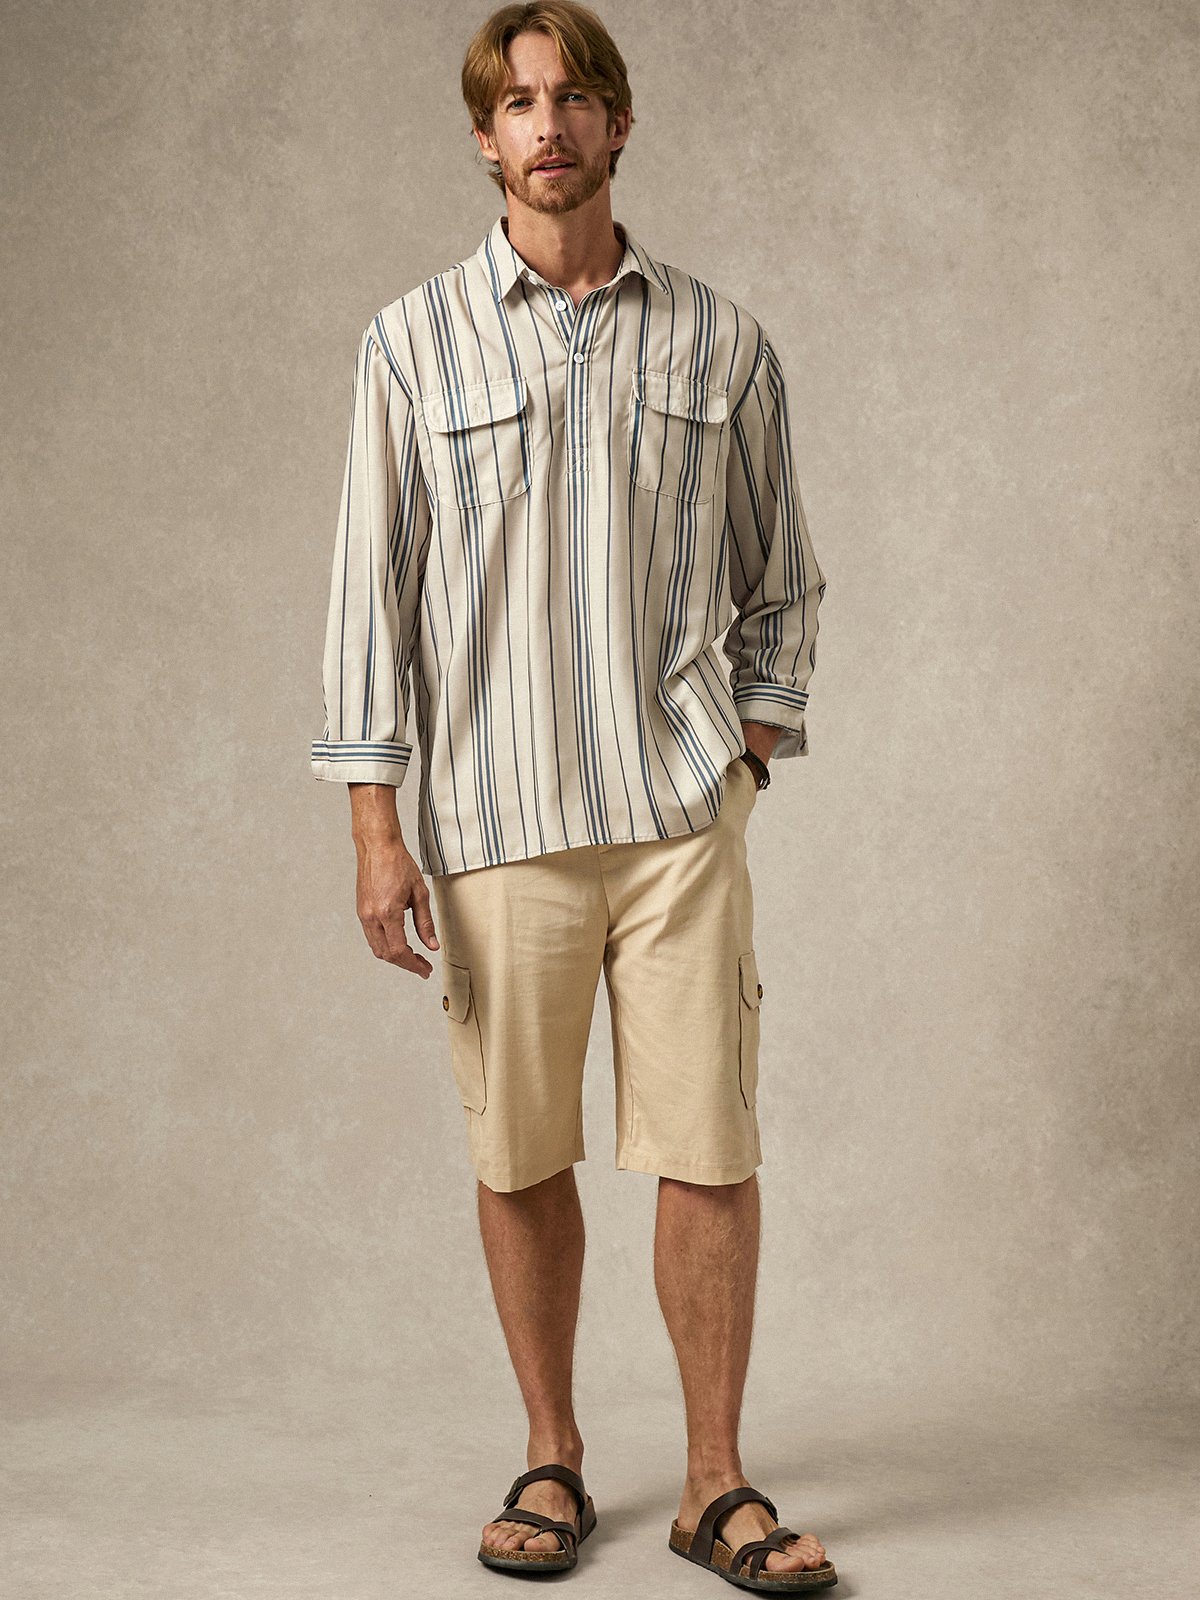 Hardaddy Stripes Flap Pockets Long Sleeve Casual Shirt